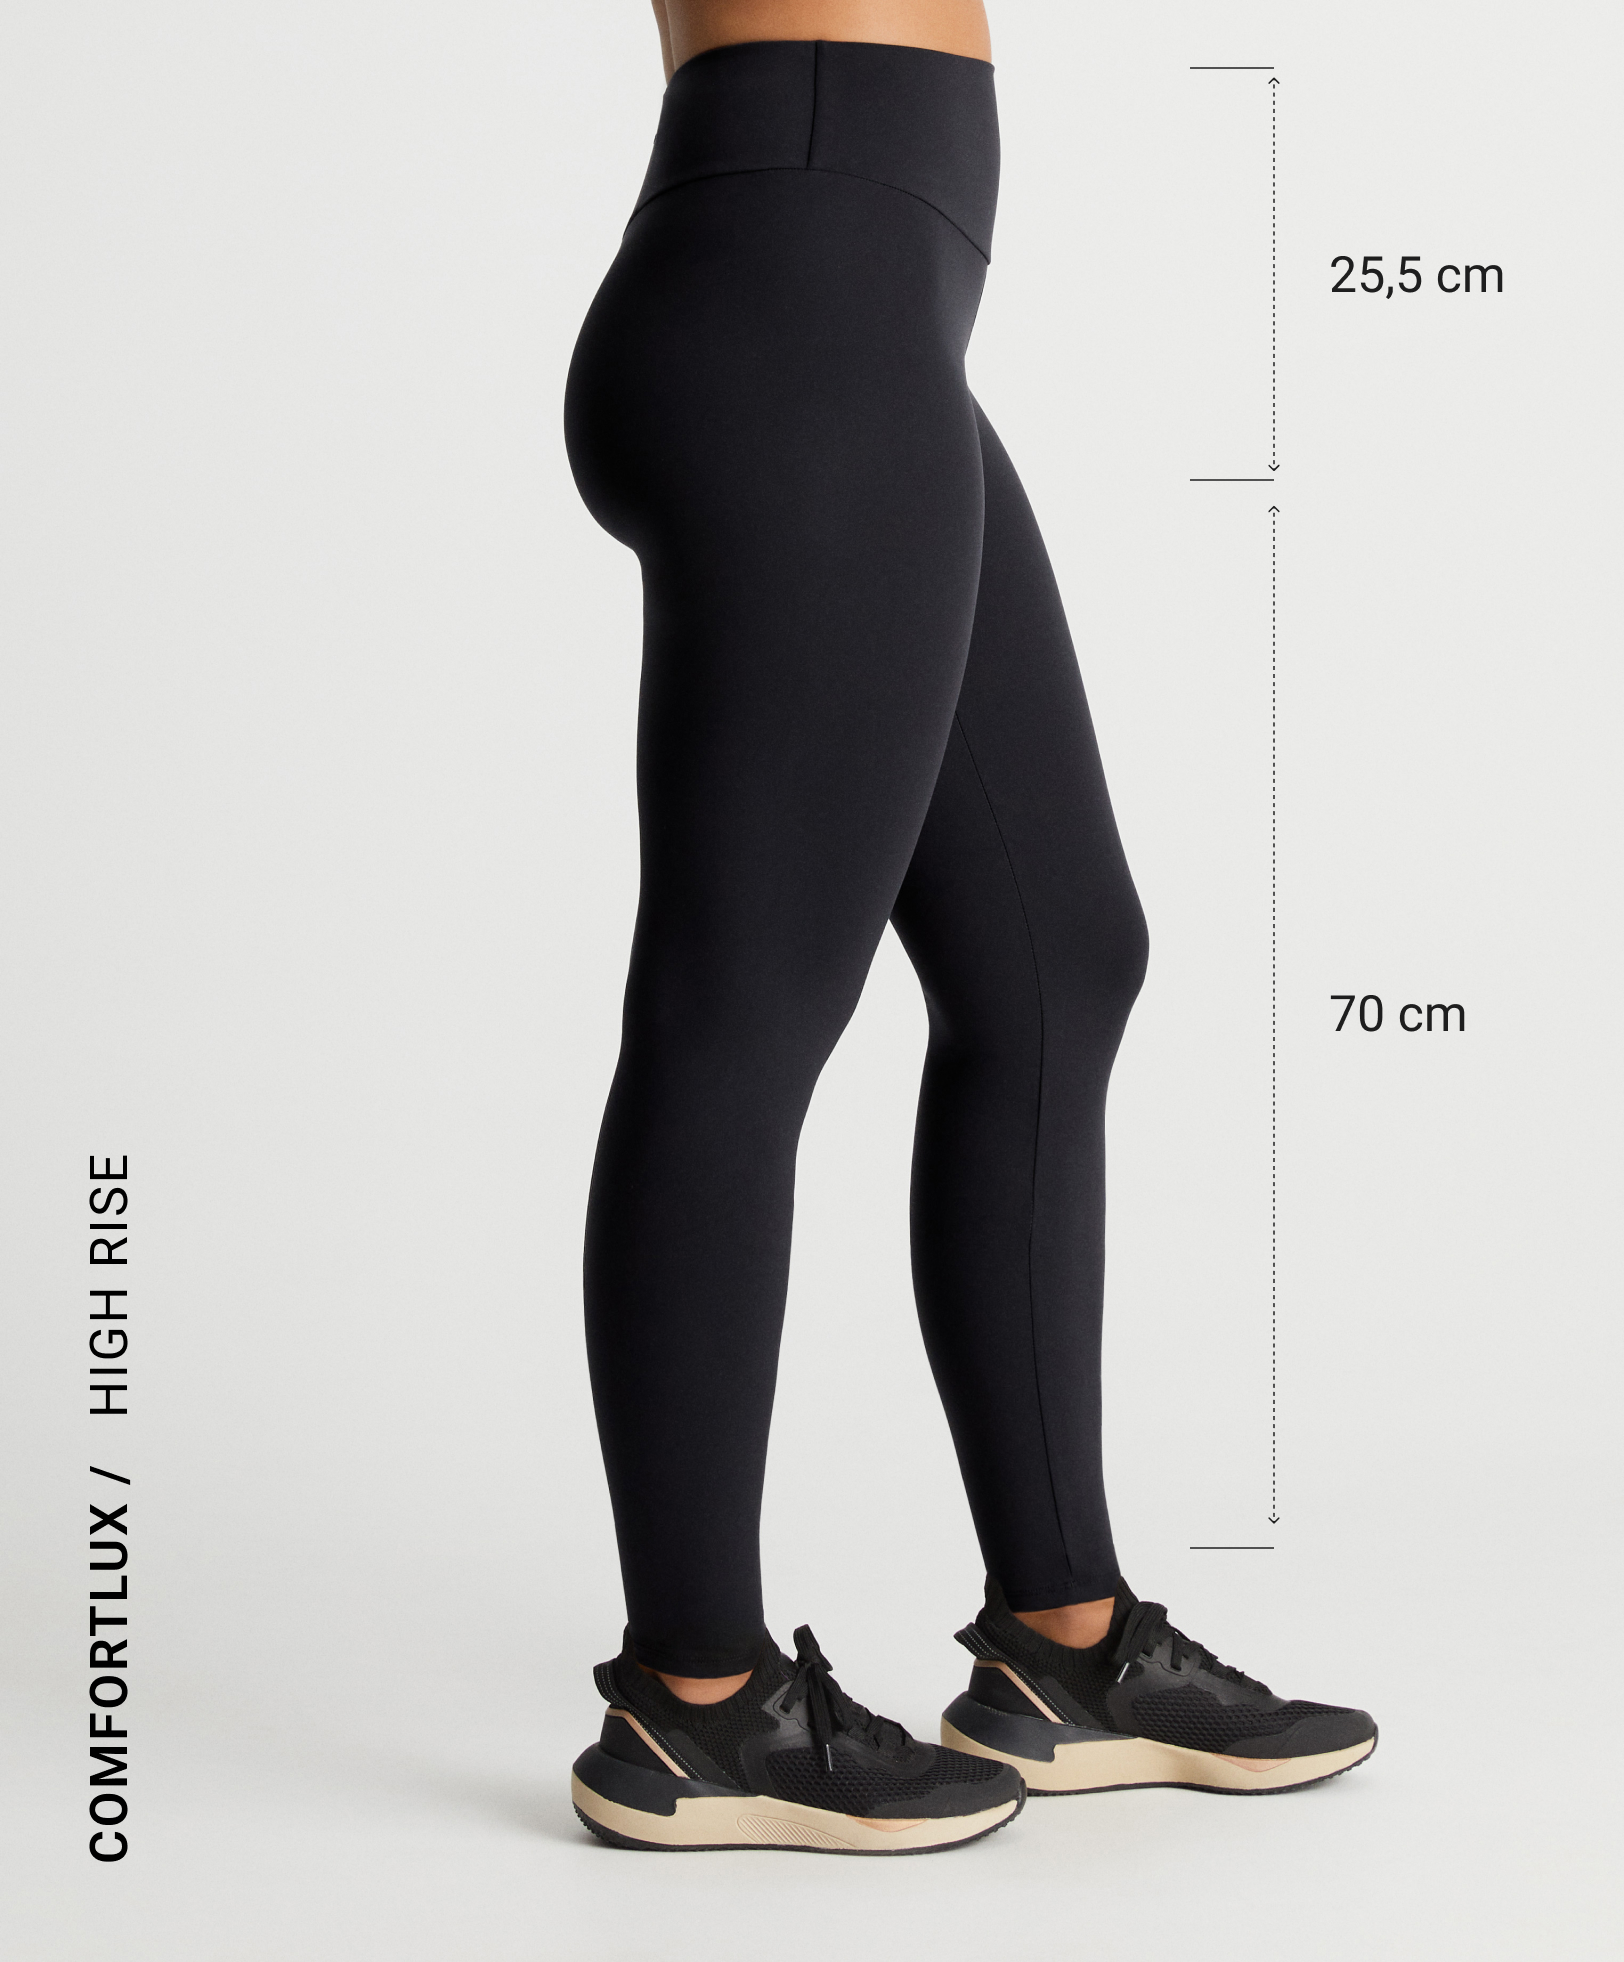 Comfortlux high-rise 70cm ankle-length leggings